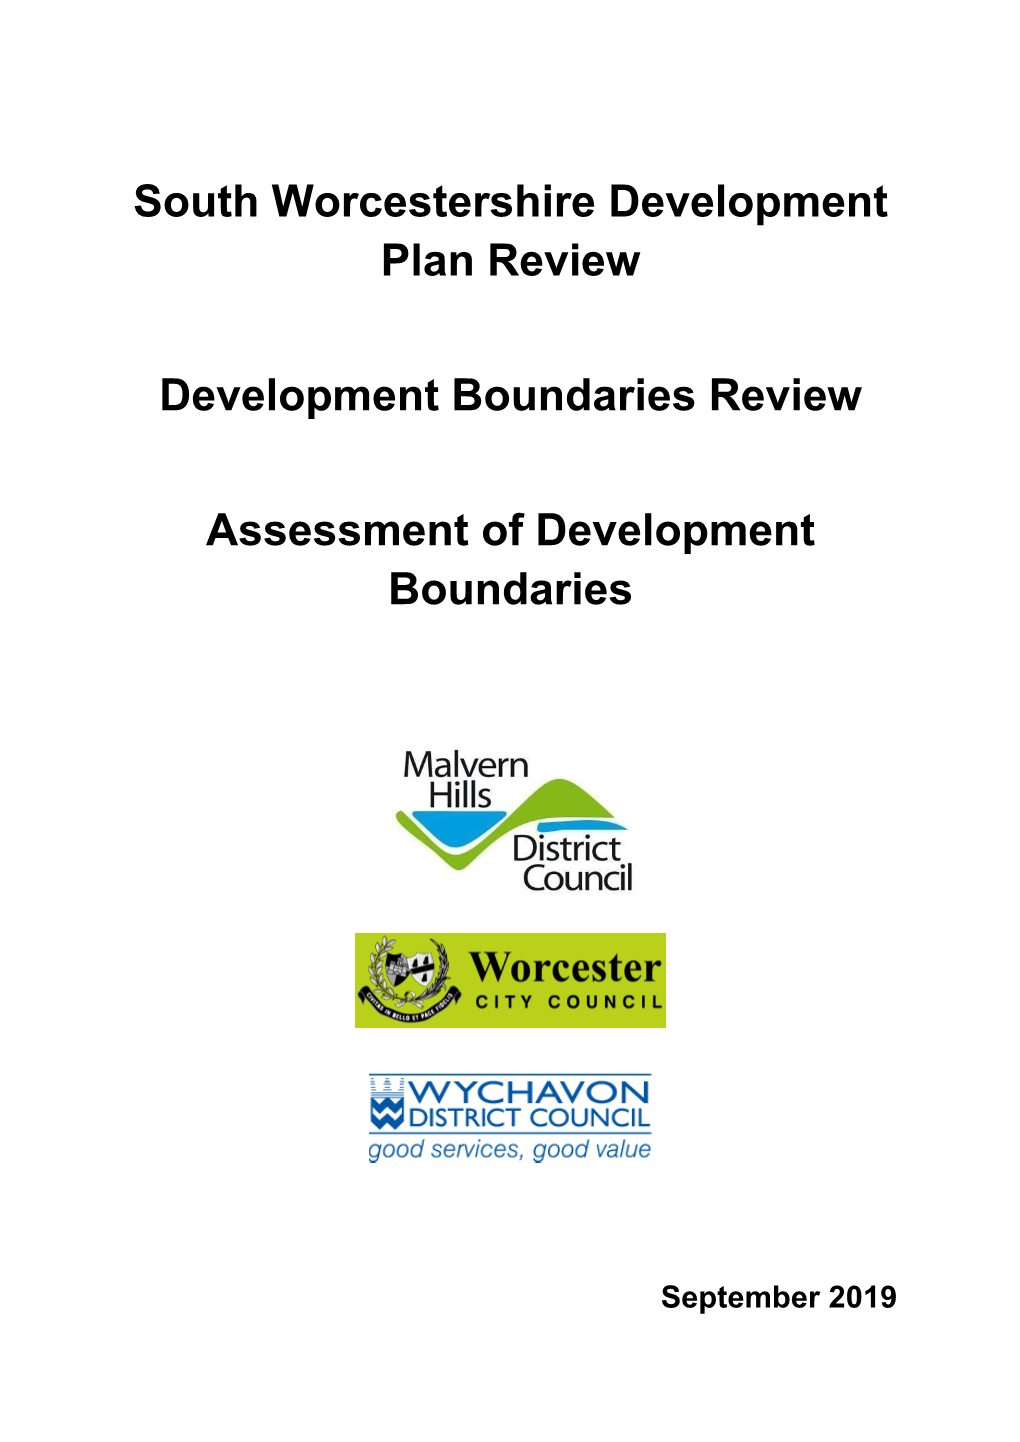 South Worcestershire Development Plan Review Development Boundaries Review Assessment of Development Boundaries